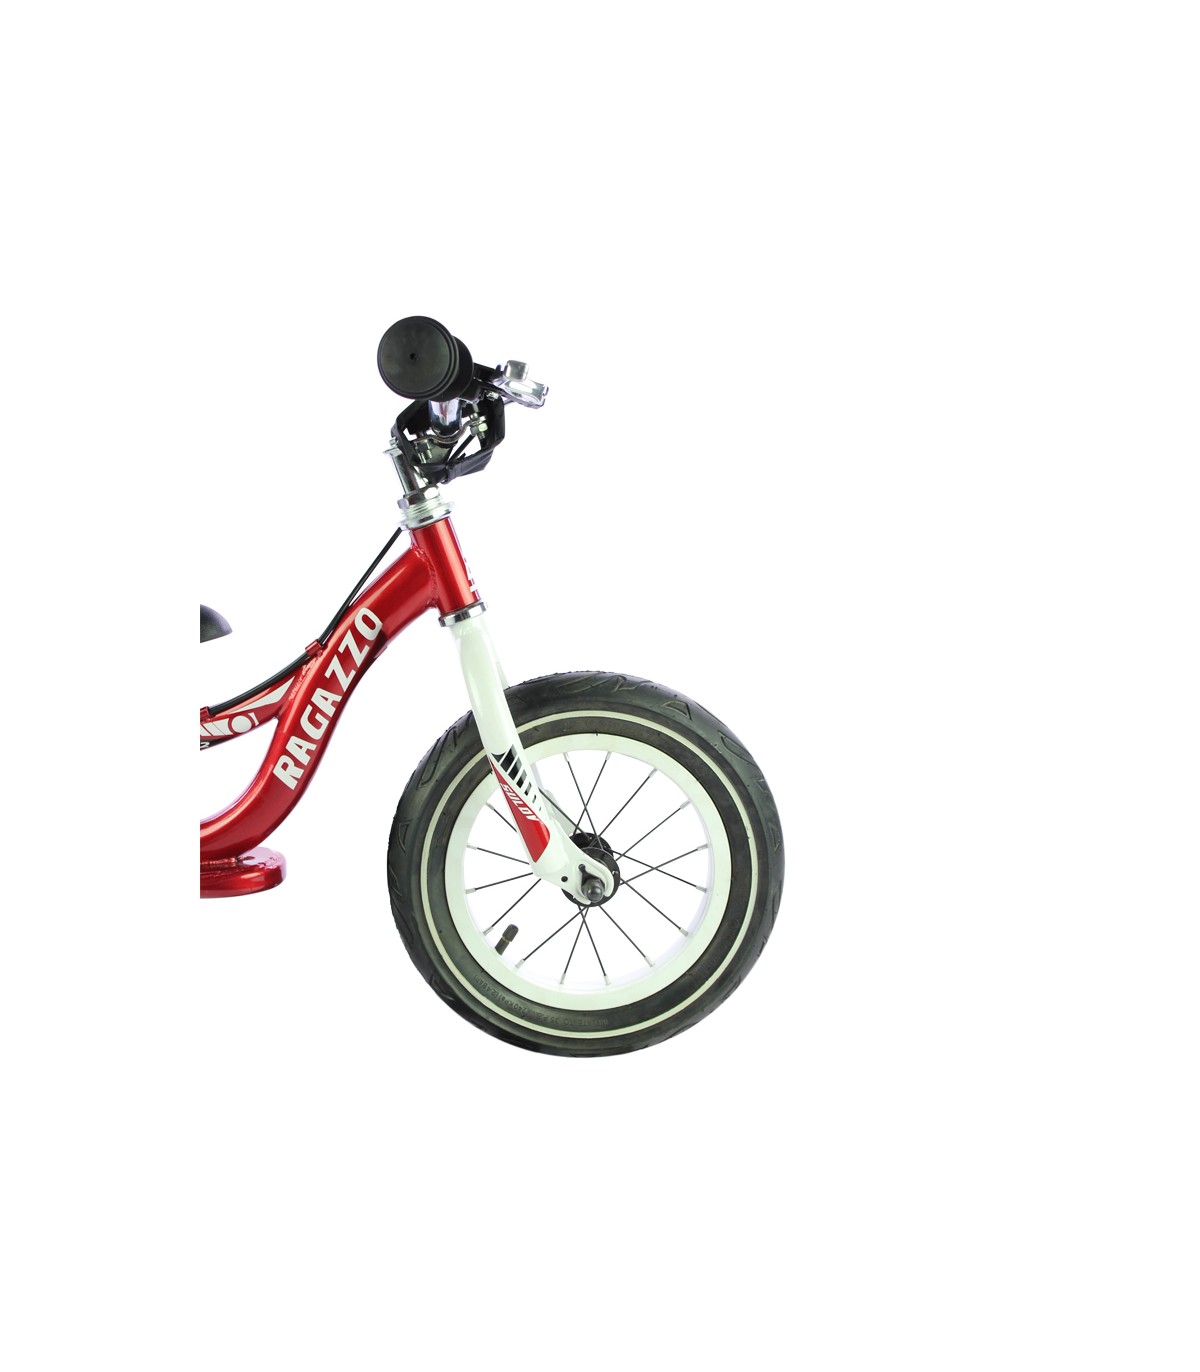 Grupo K-2 Wonduu Minibike Bicicleta Sin Pedales para Ni/ños Repetto